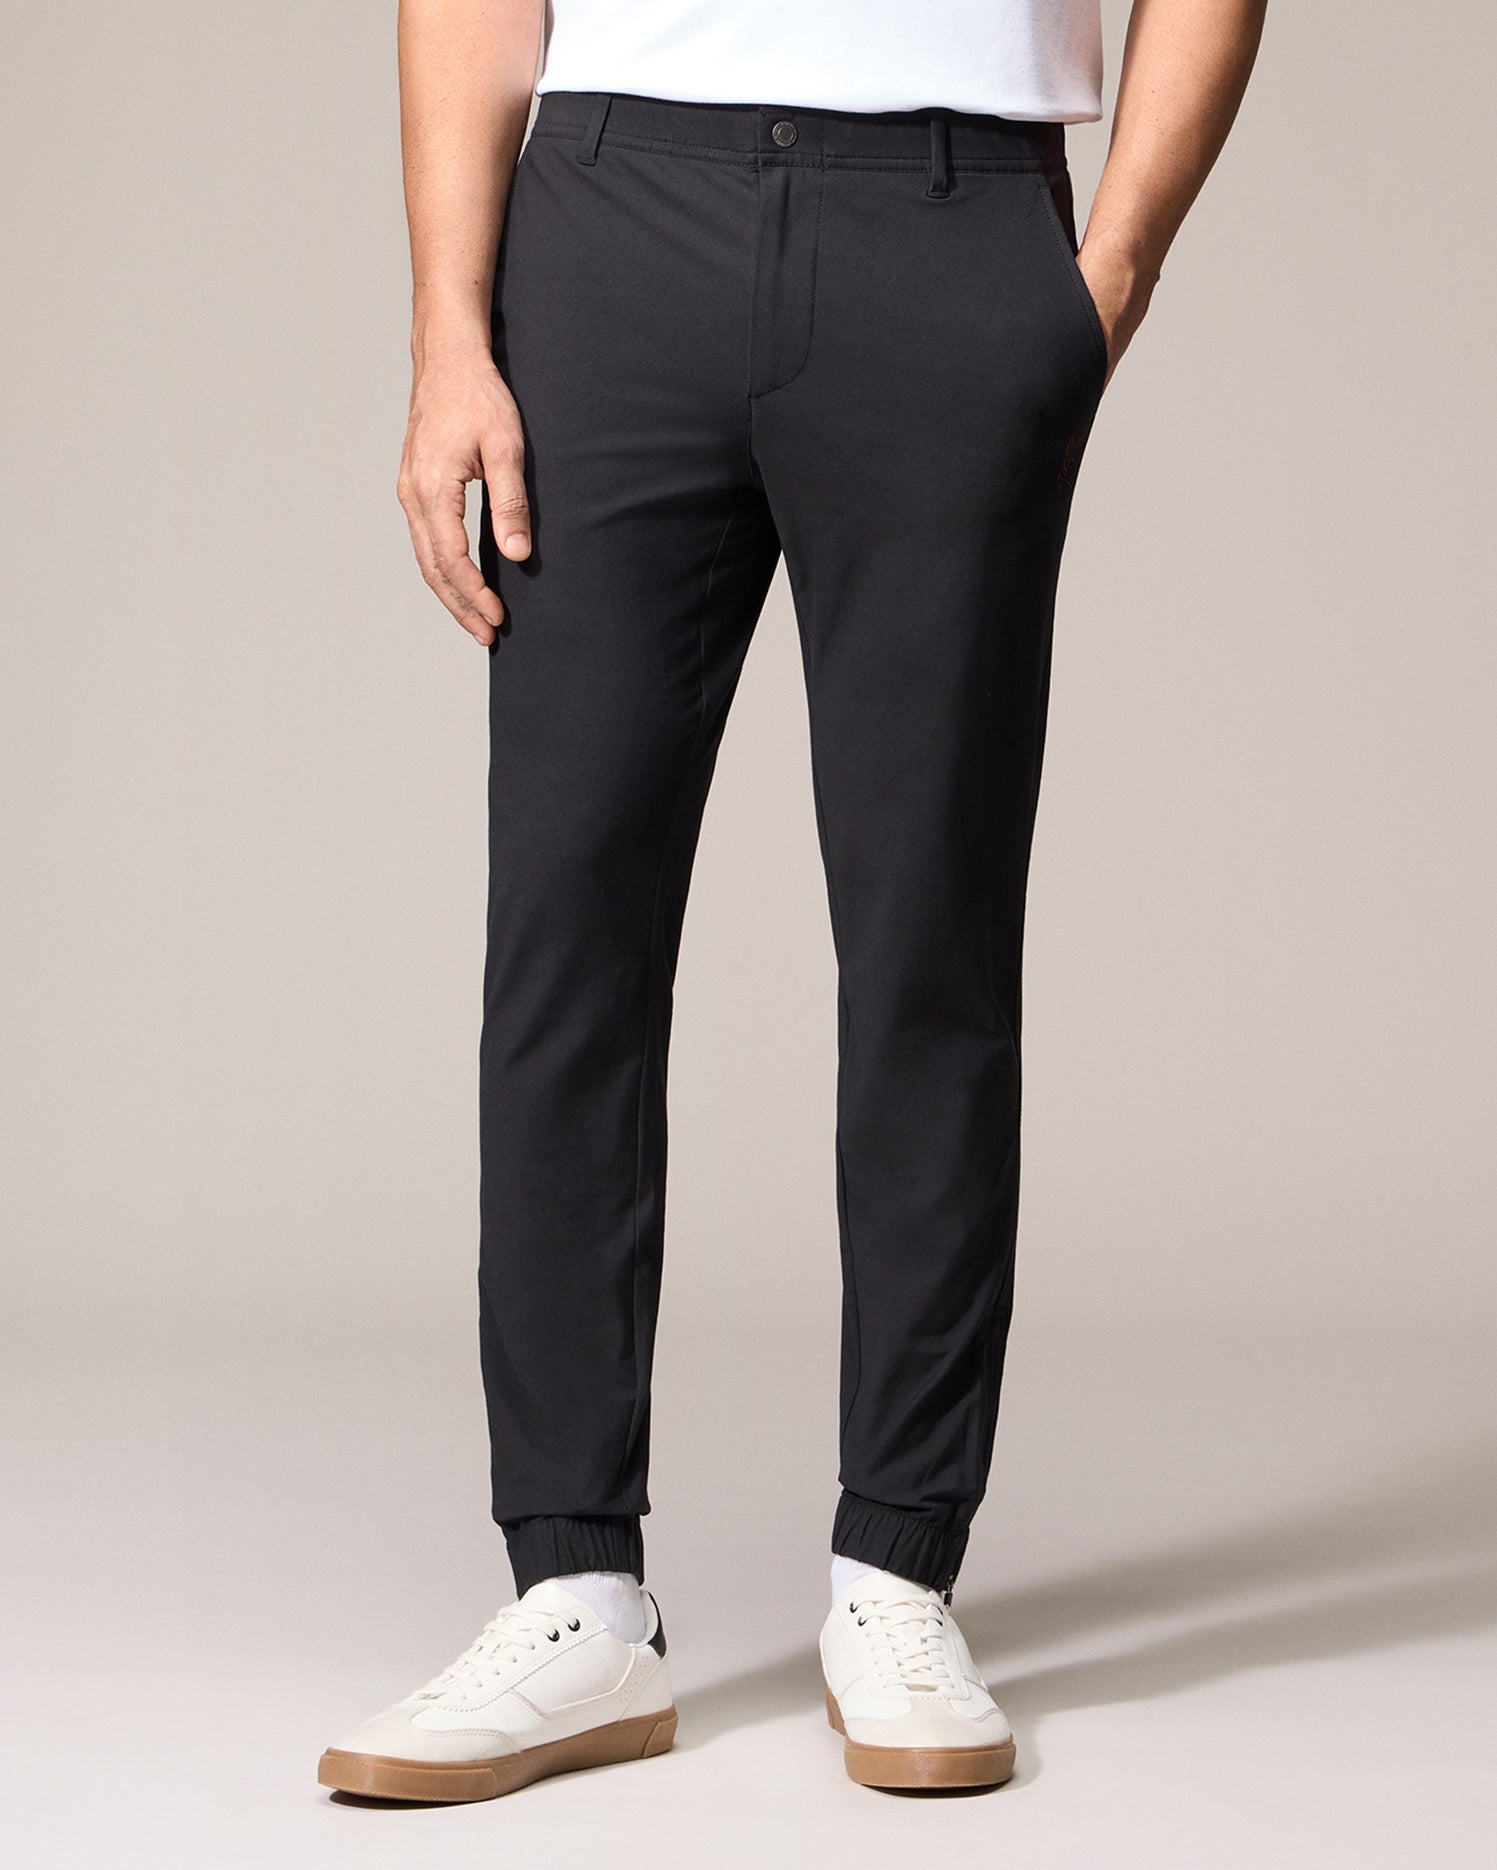 Men's Pants & Shorts: Chino, Sweatpants, cotton, denim